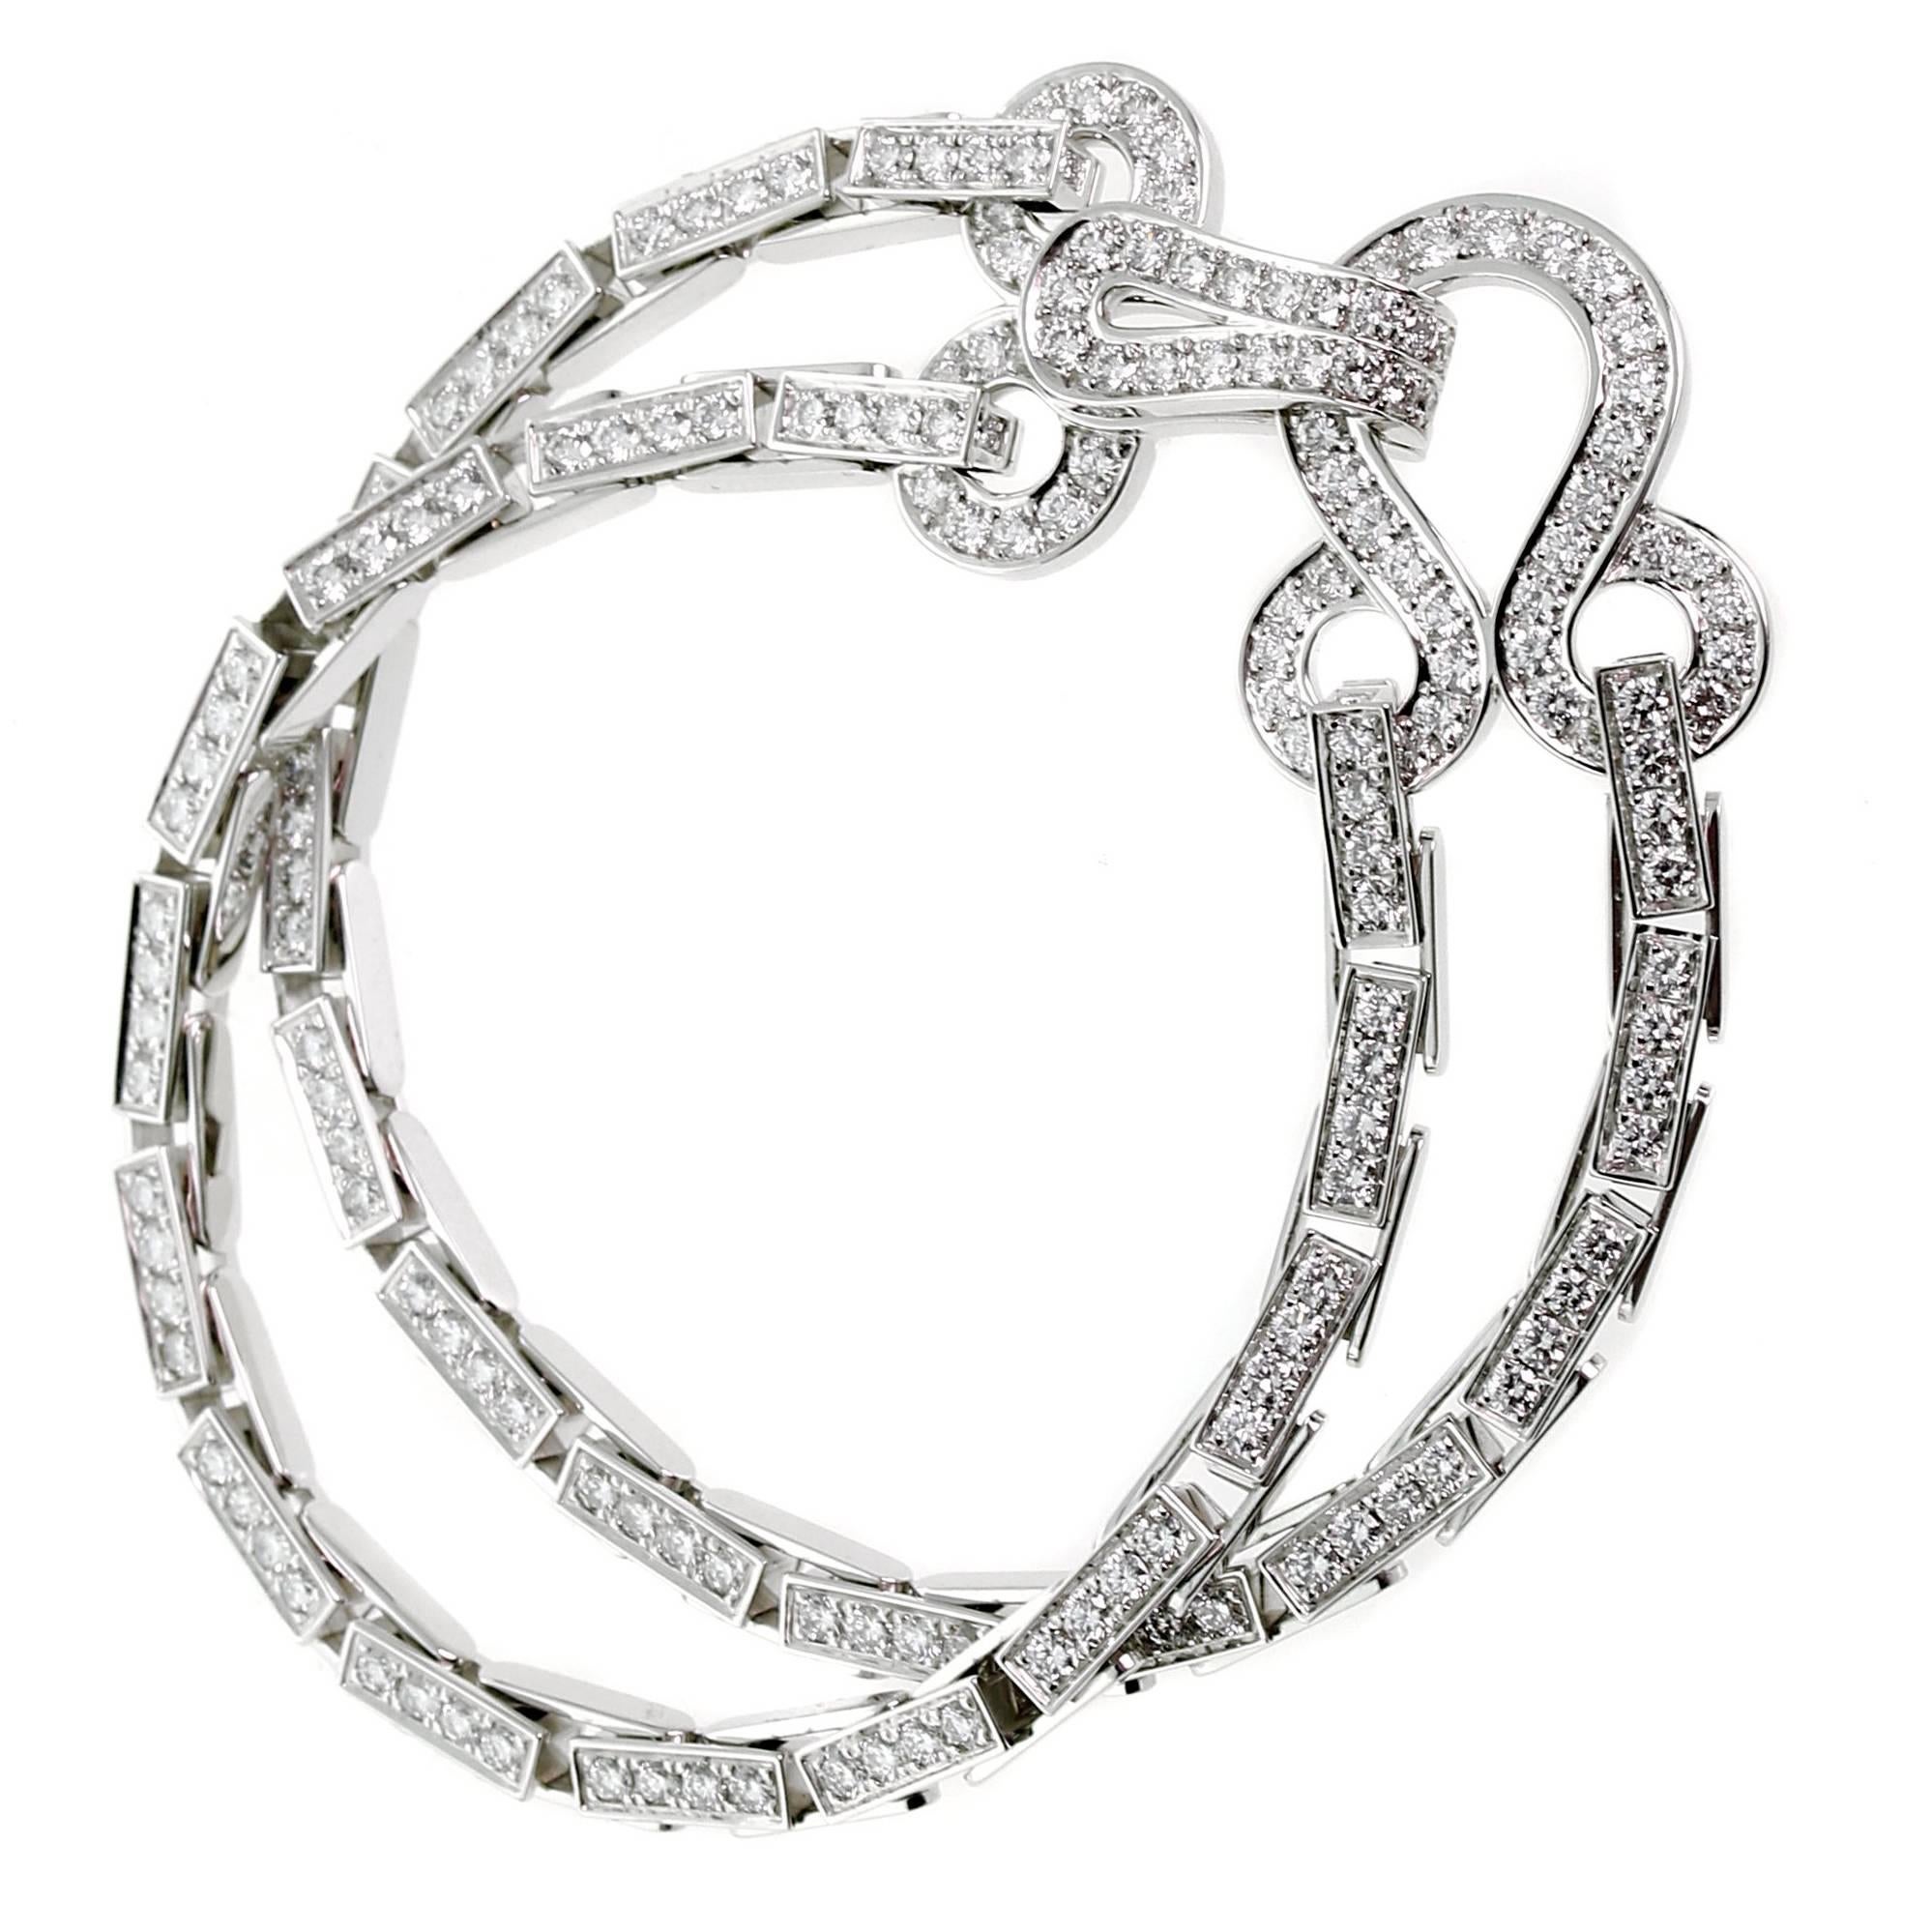 Cartier Agrafe Diamond Bracelet